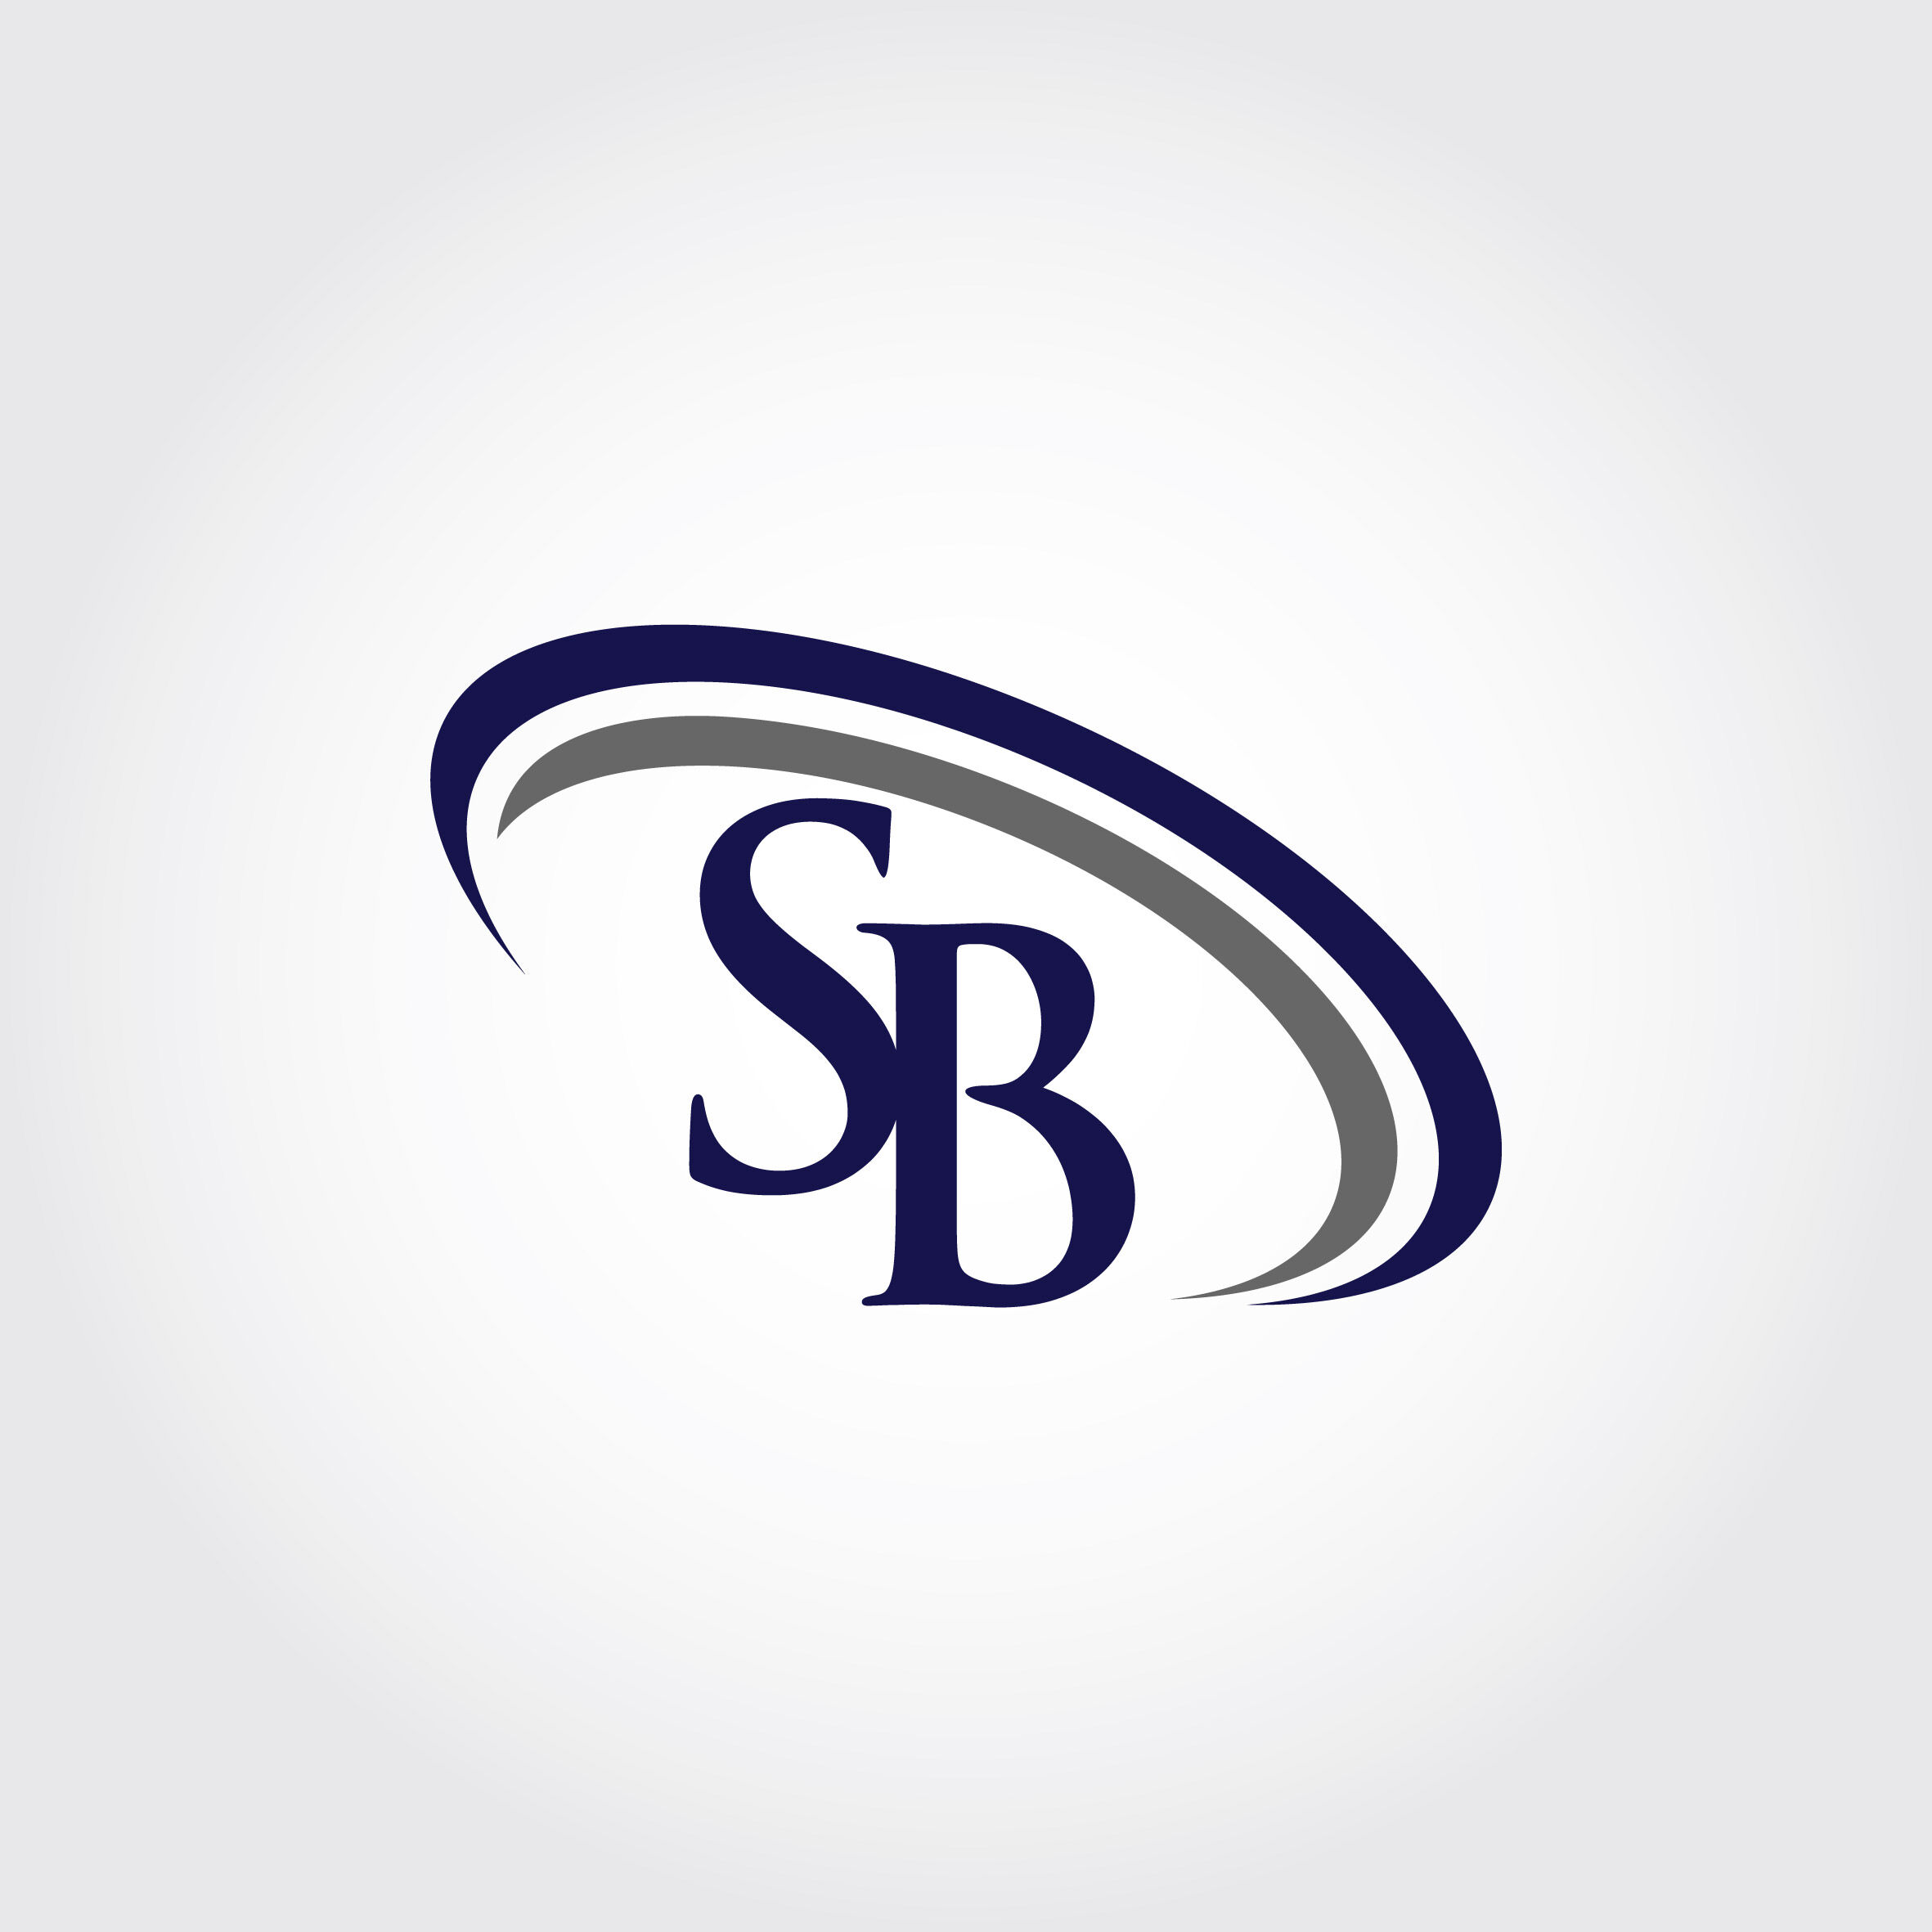 Monogram Sb Logo Design By Vectorseller Thehungryjpeg